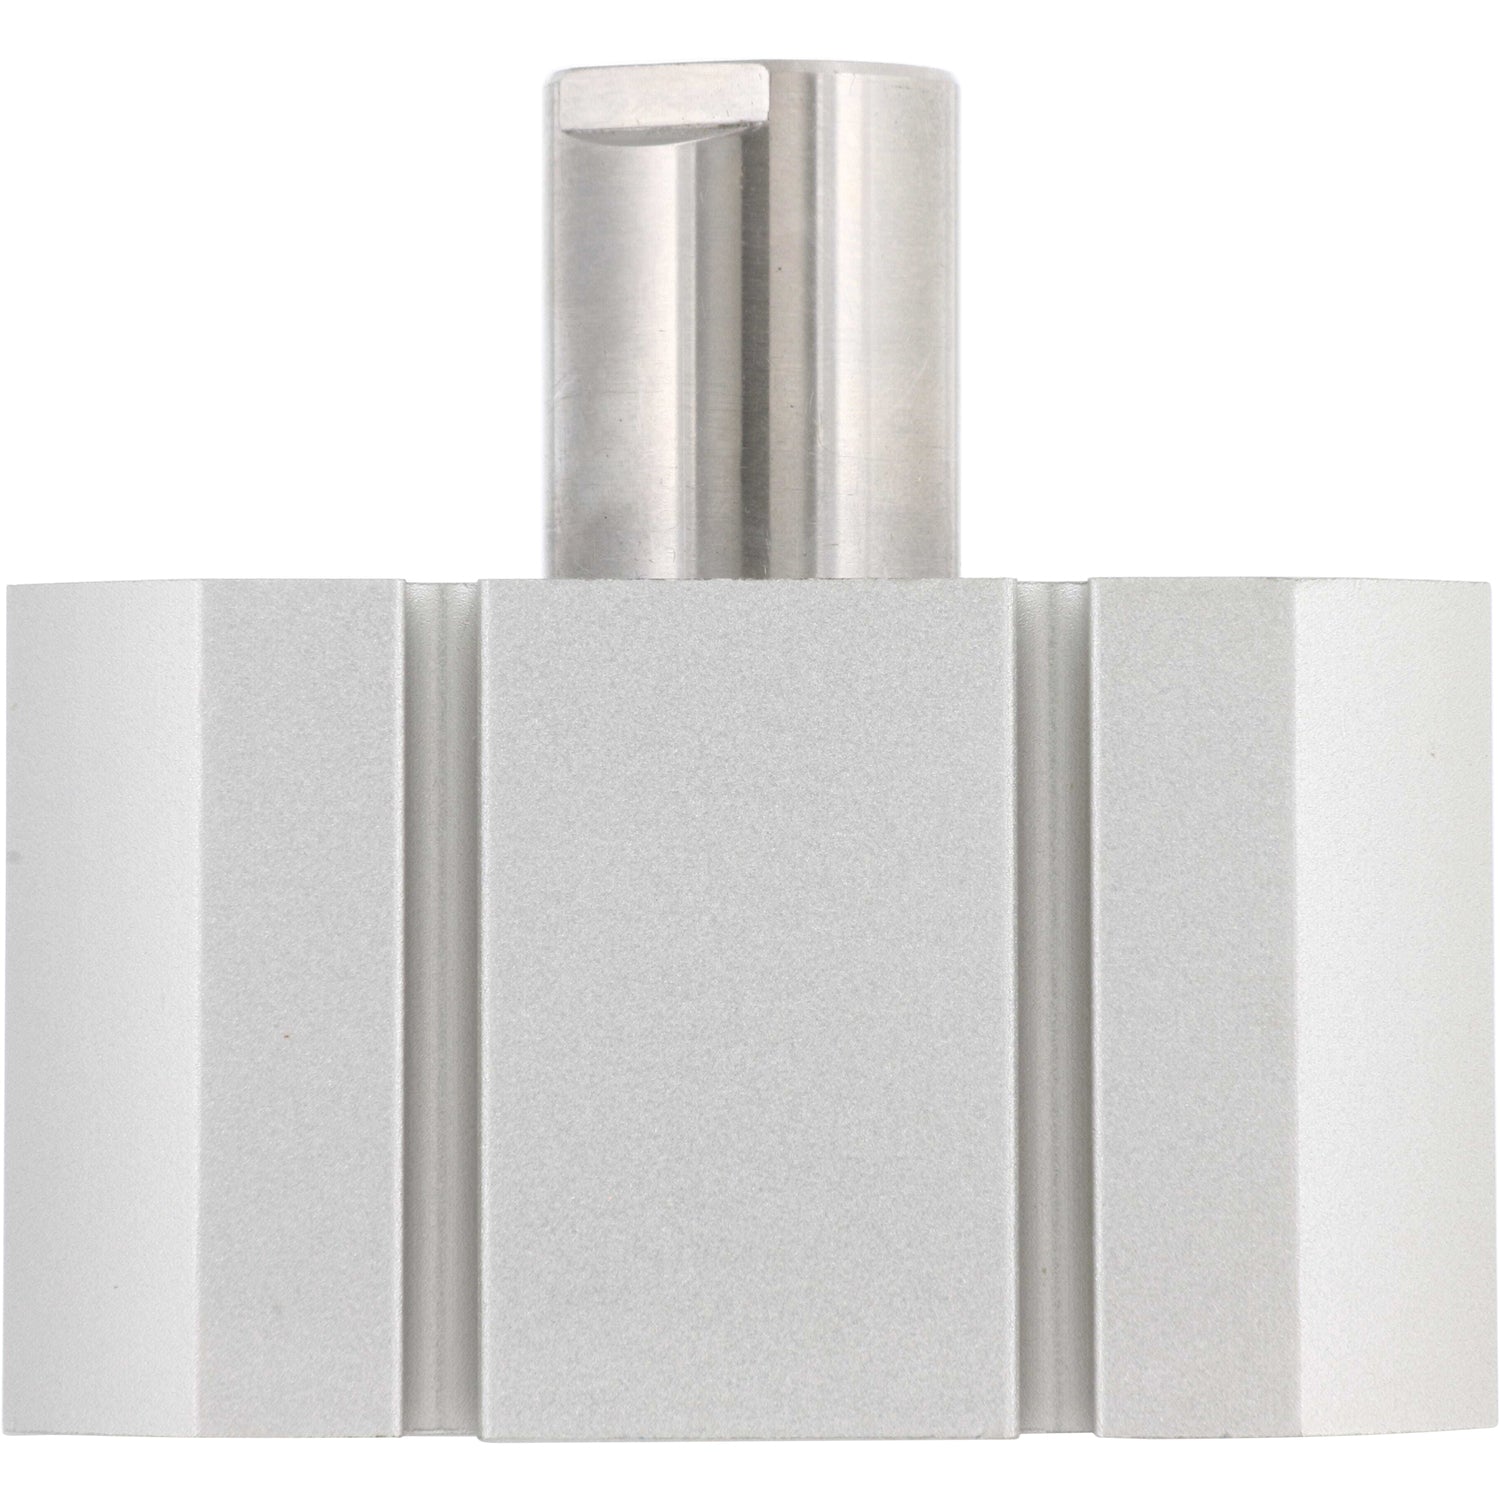 Grey rectangular pneumatic cylinder shown on white background.